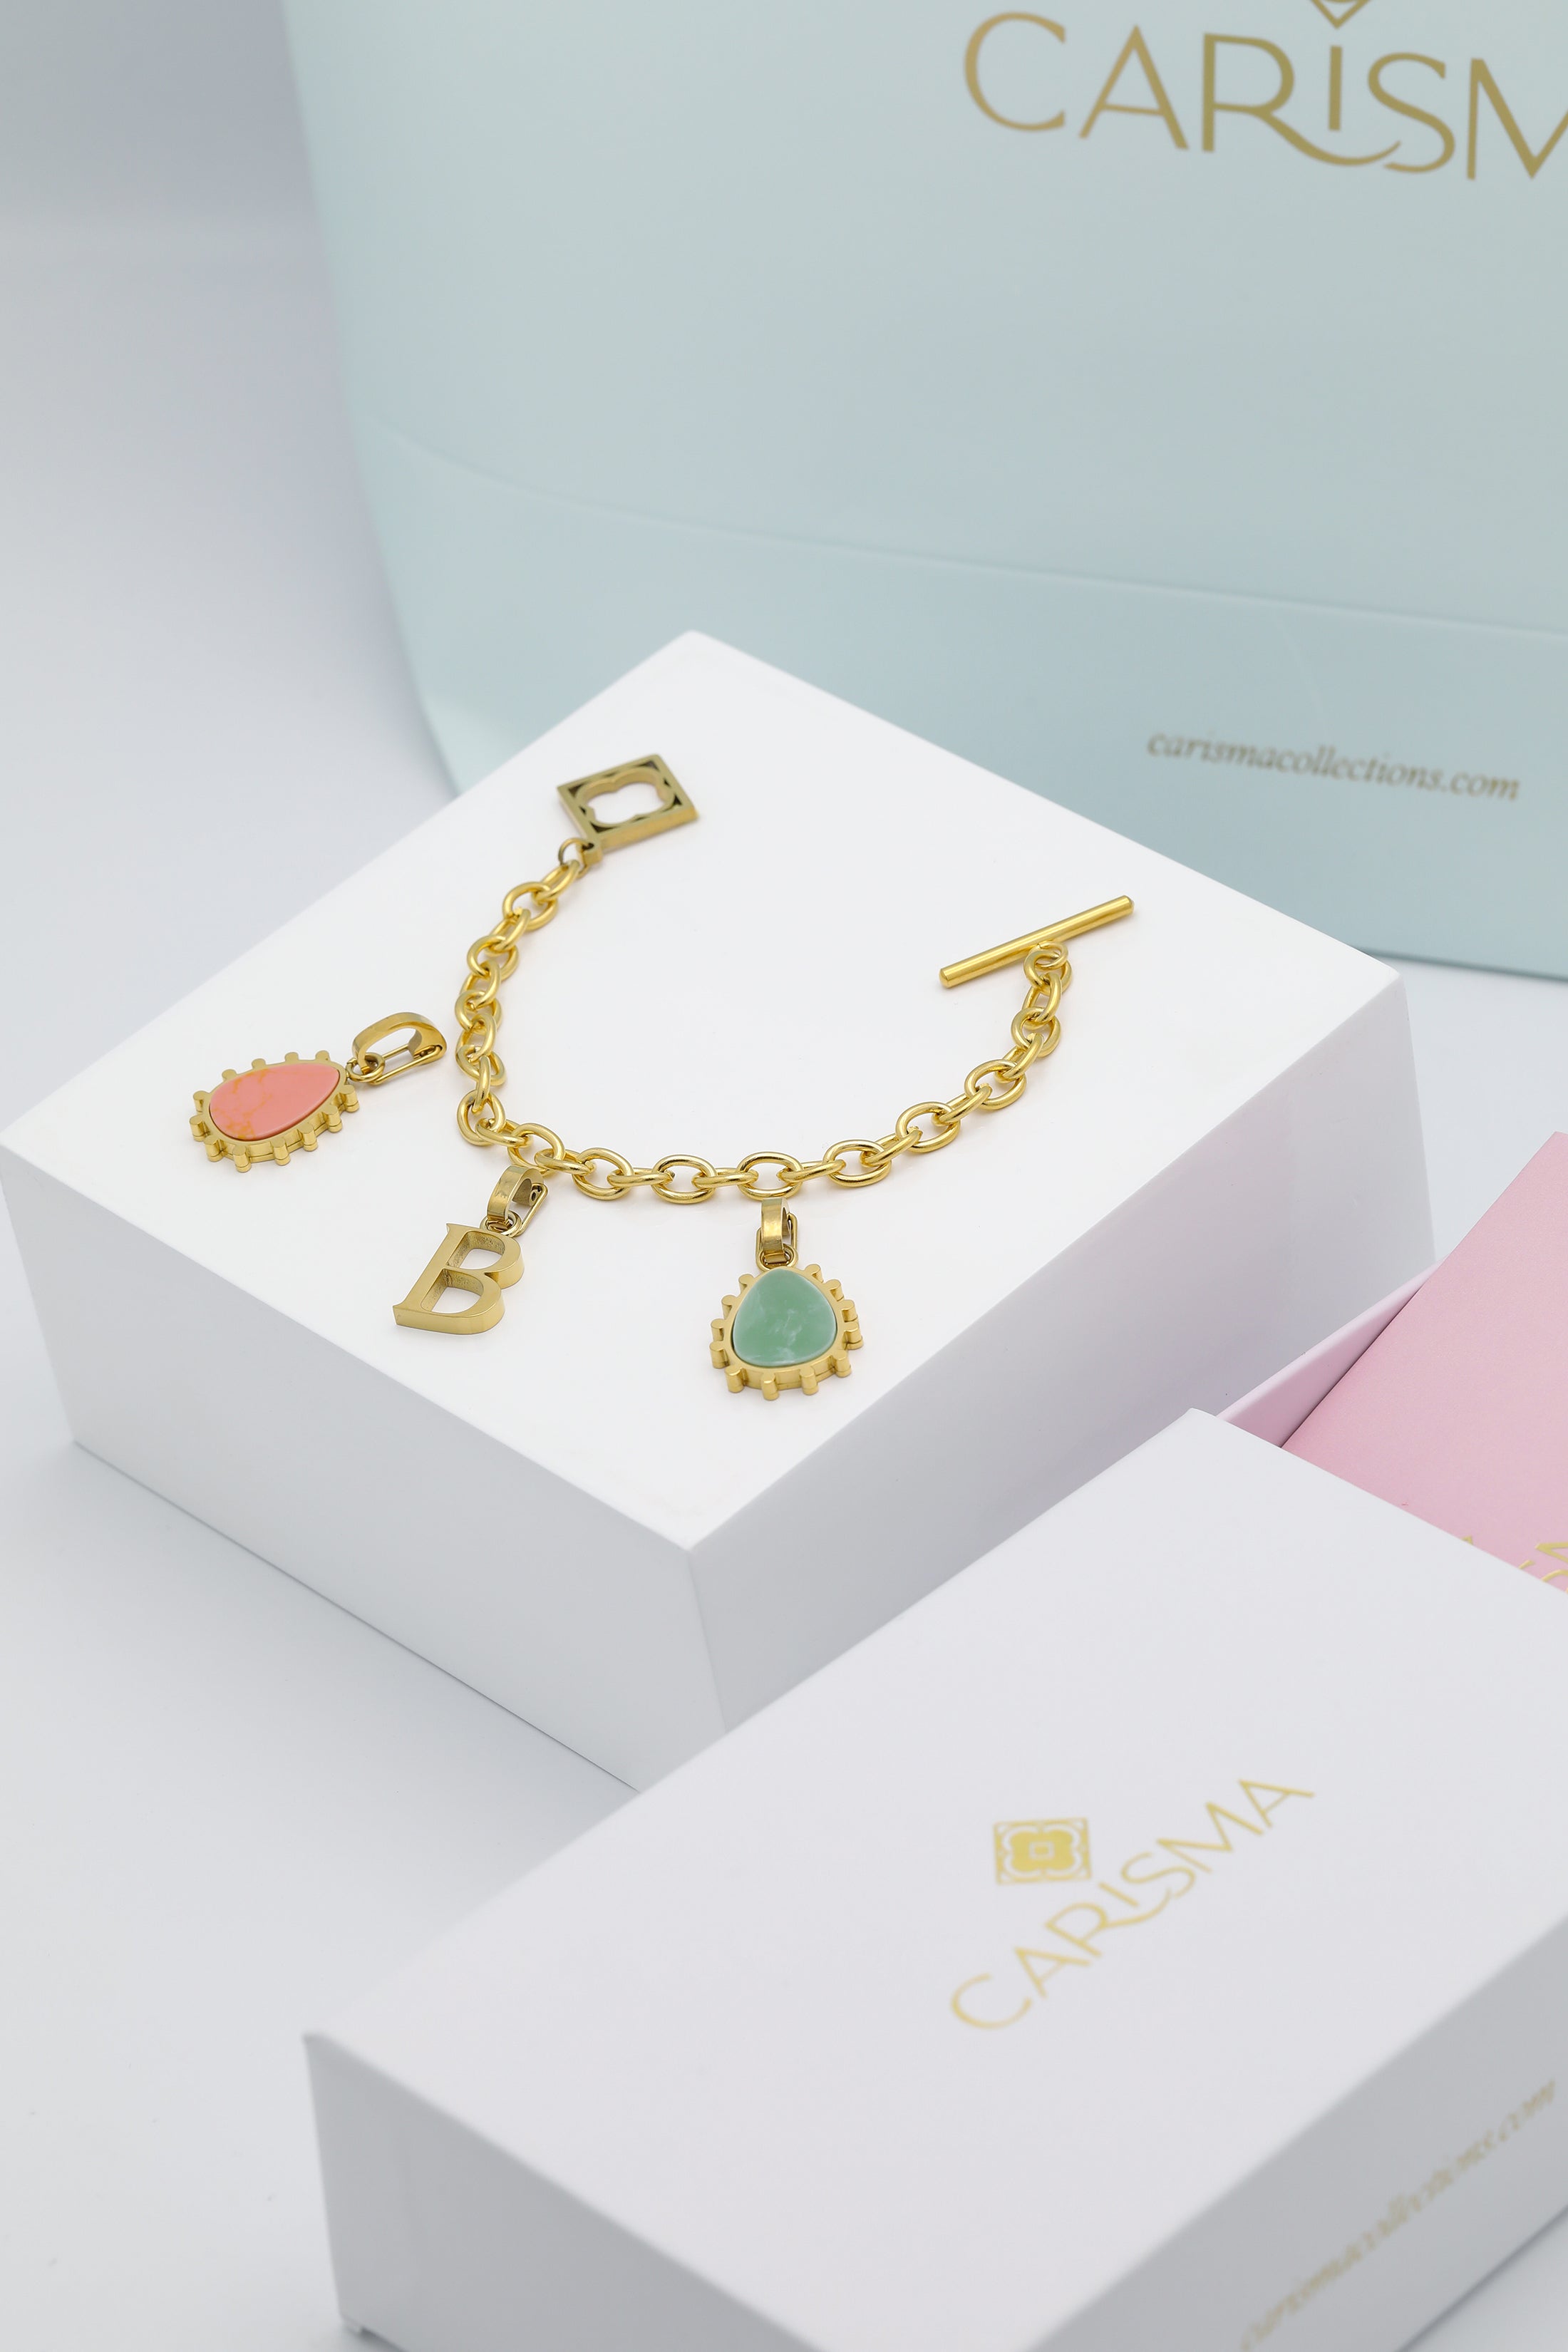 Prickly Pear Orange &amp; Green Stone Pendants &amp; Carisma Letter Pendant Charm Bracelet Gift Set